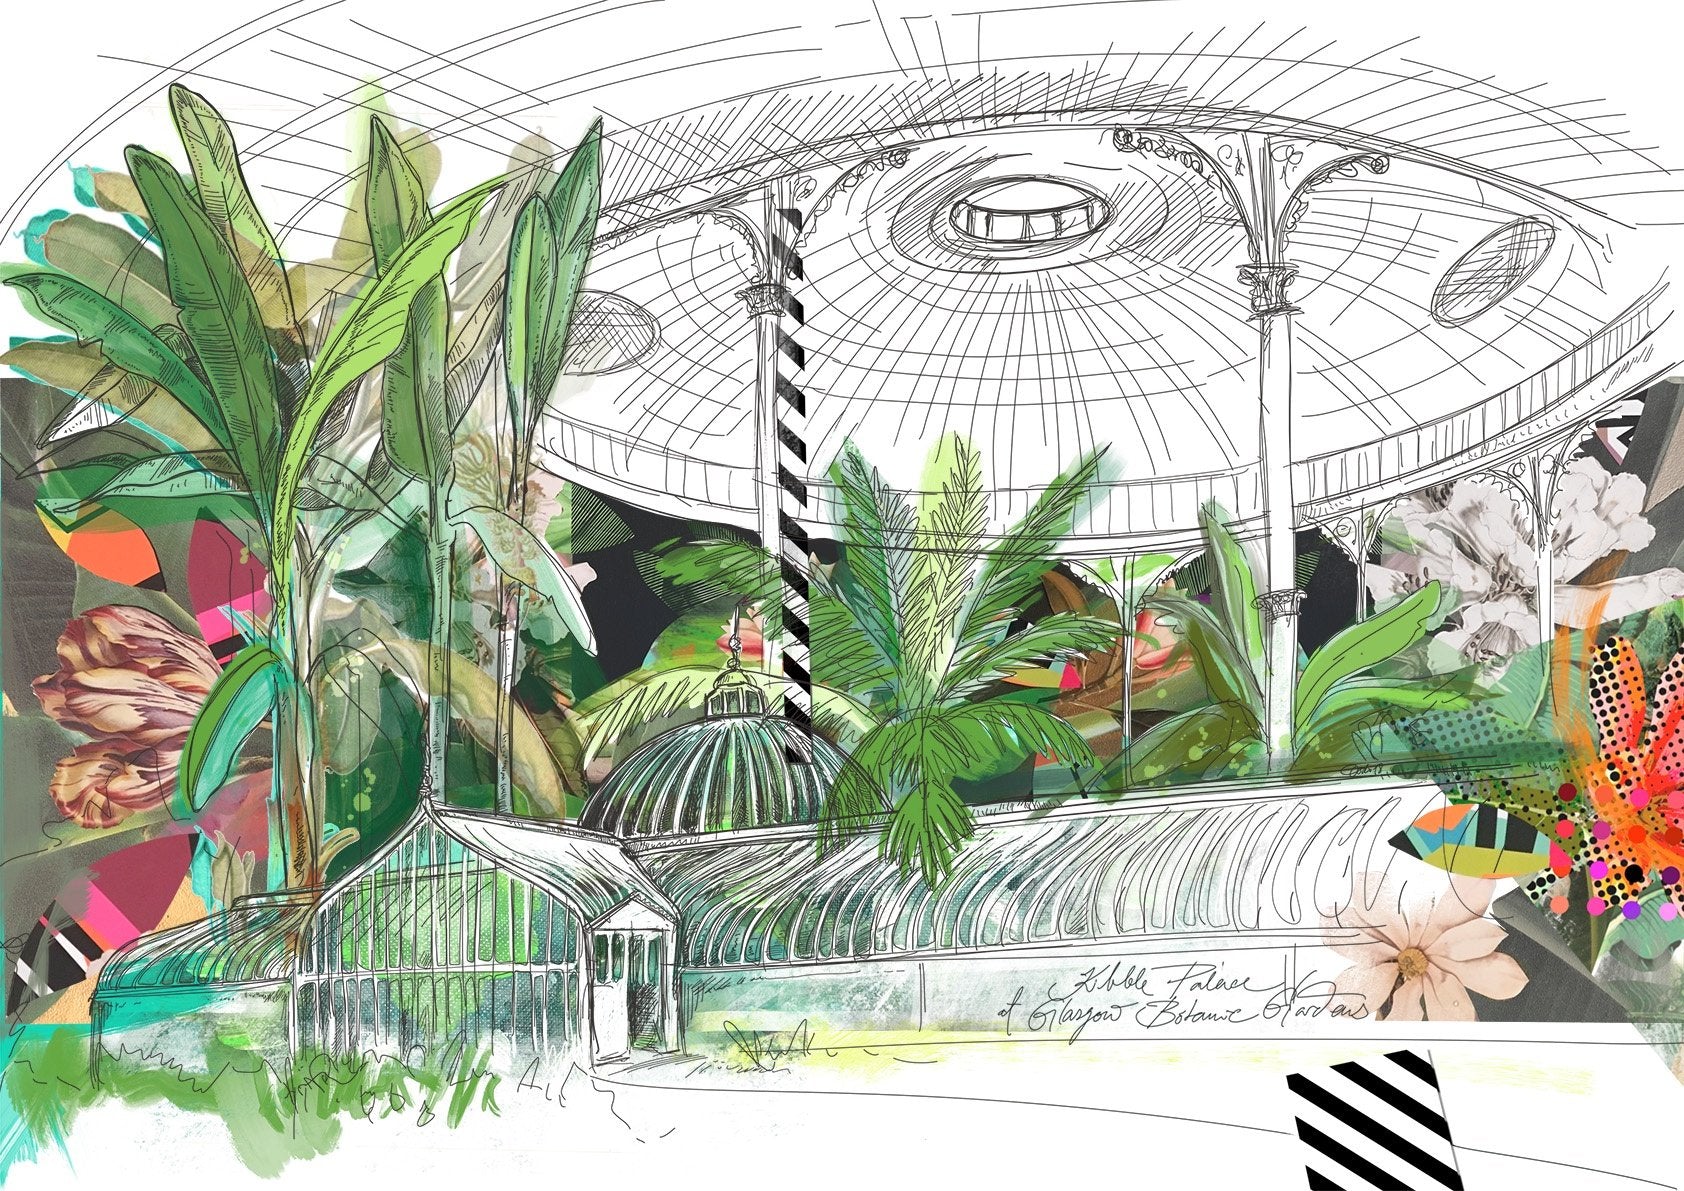 Kibble Palace of Glasgow Botanic Gardens A4 Print